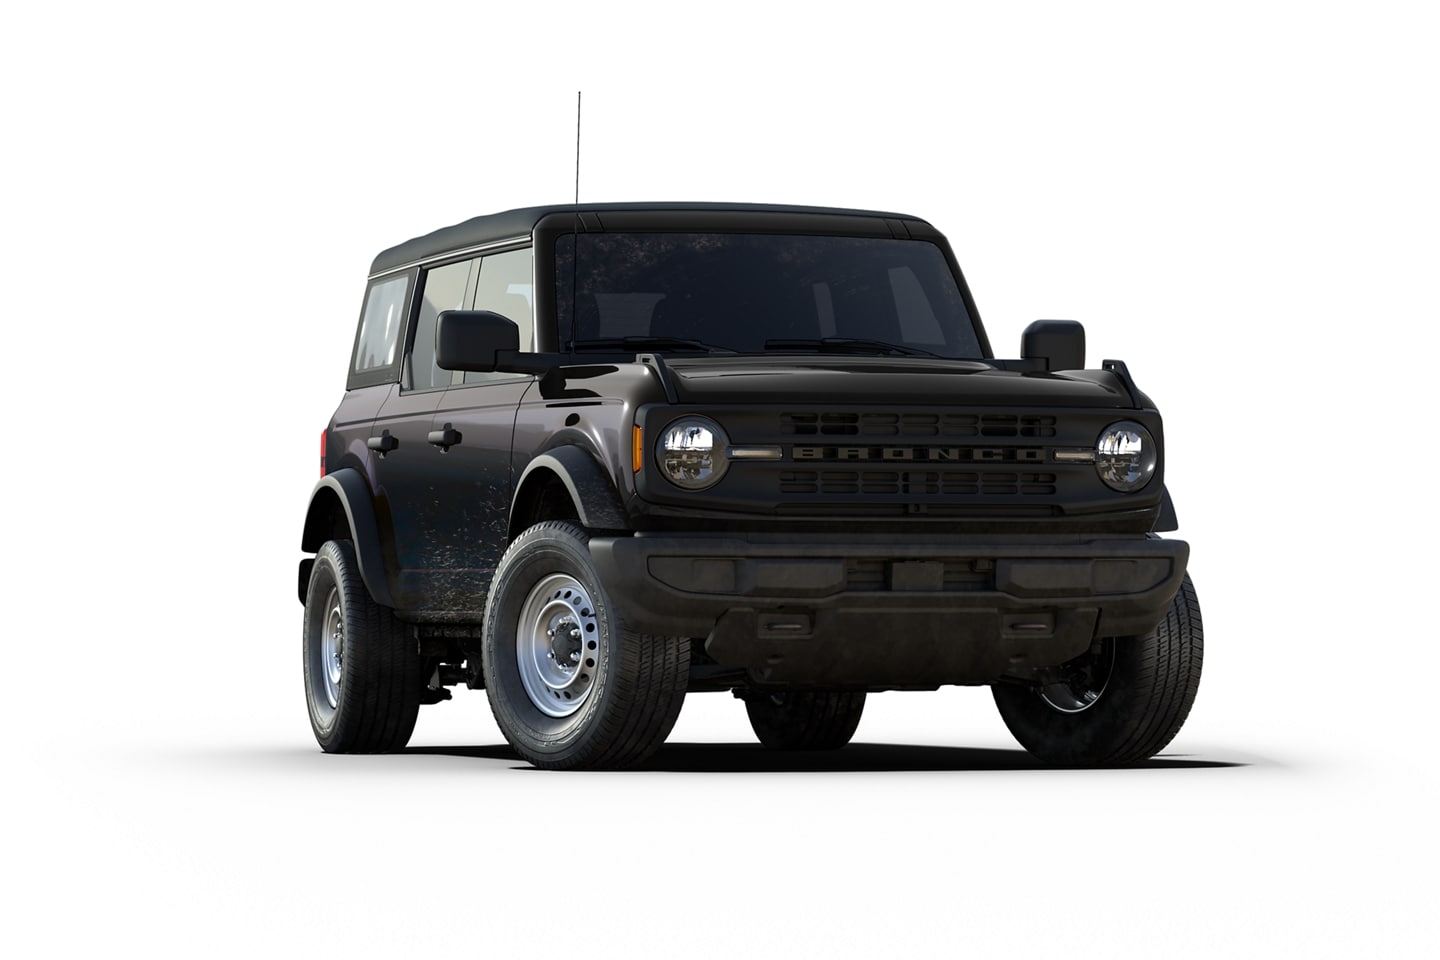 2021 Ford® Bronco™ Base model